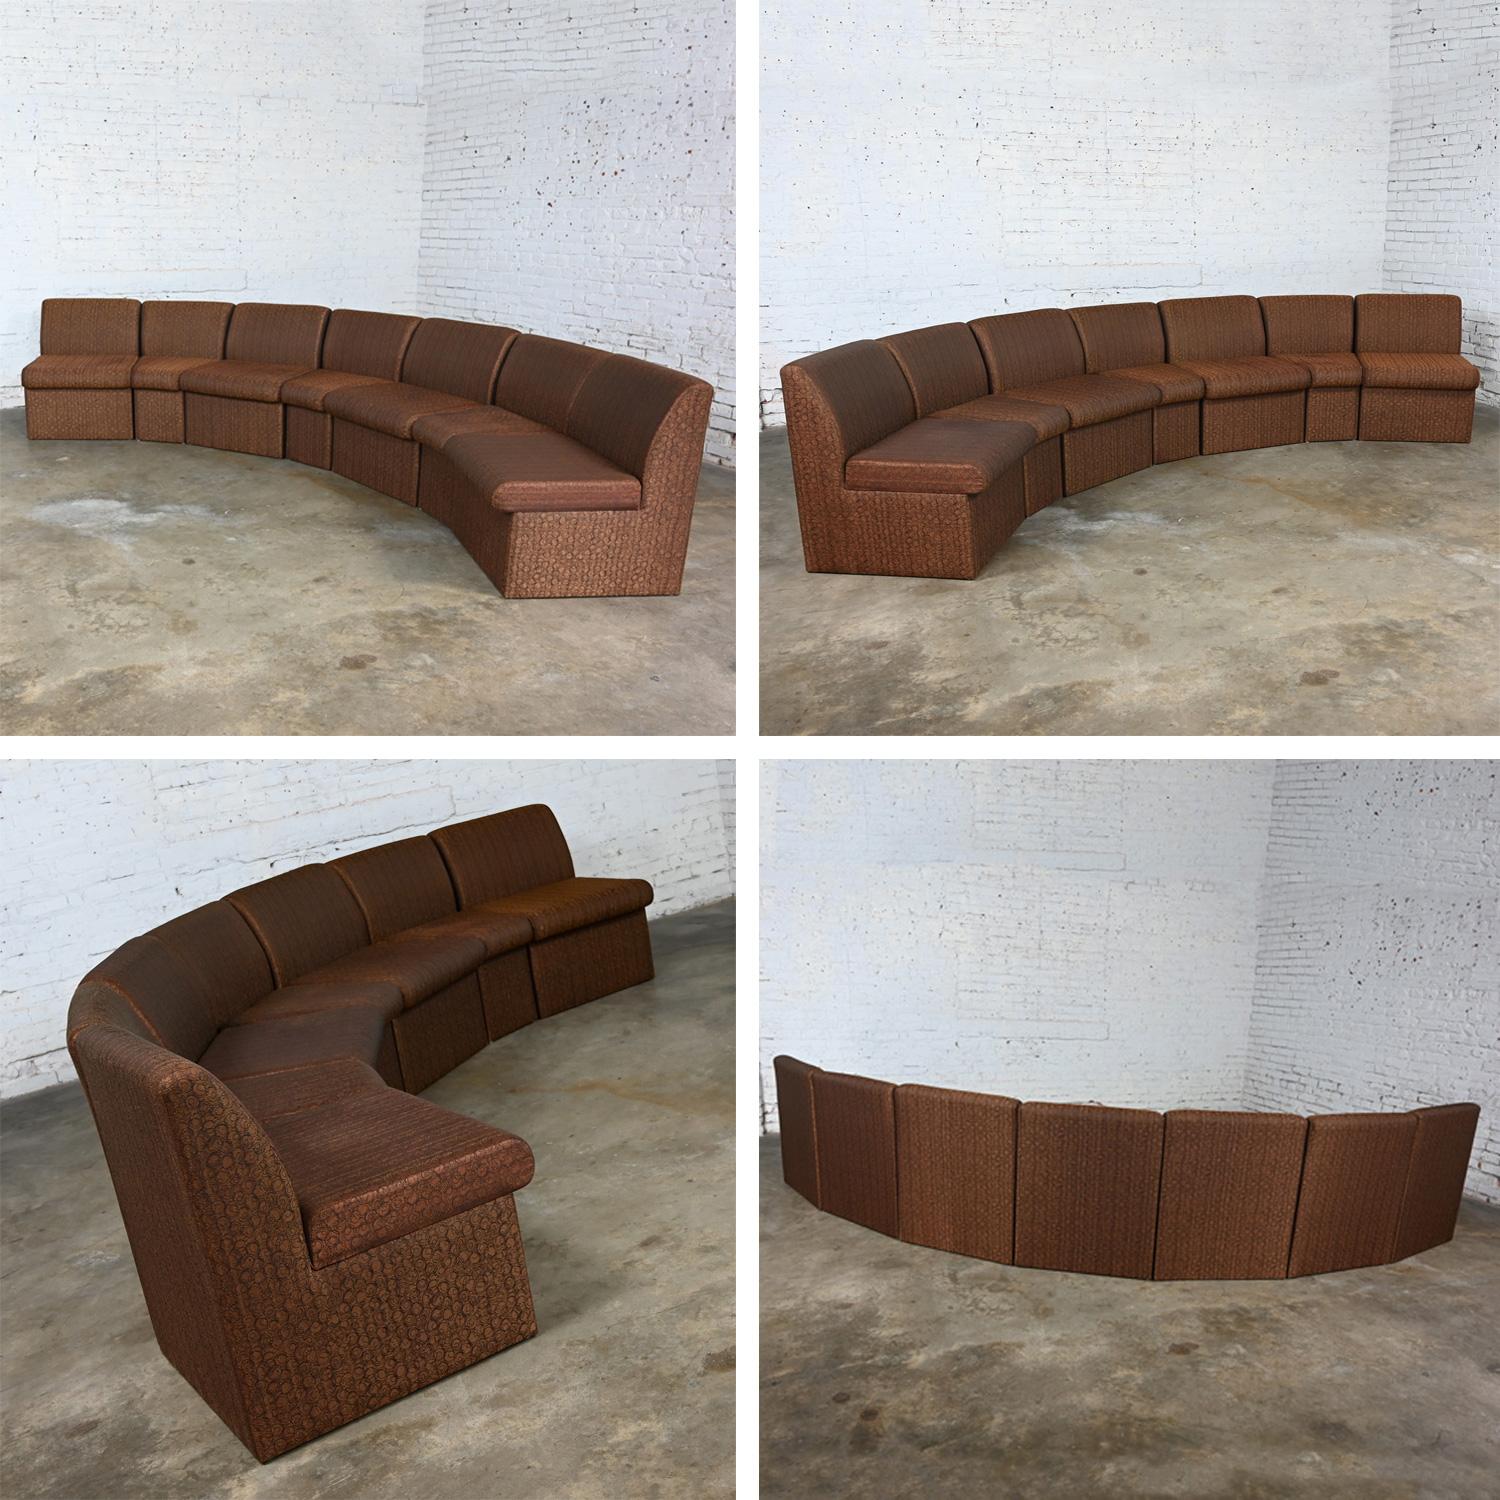 Fin du 20e siècle Modernity Global Upholstery Company Canapé sectionnel 7 pièces Brown en vente 10